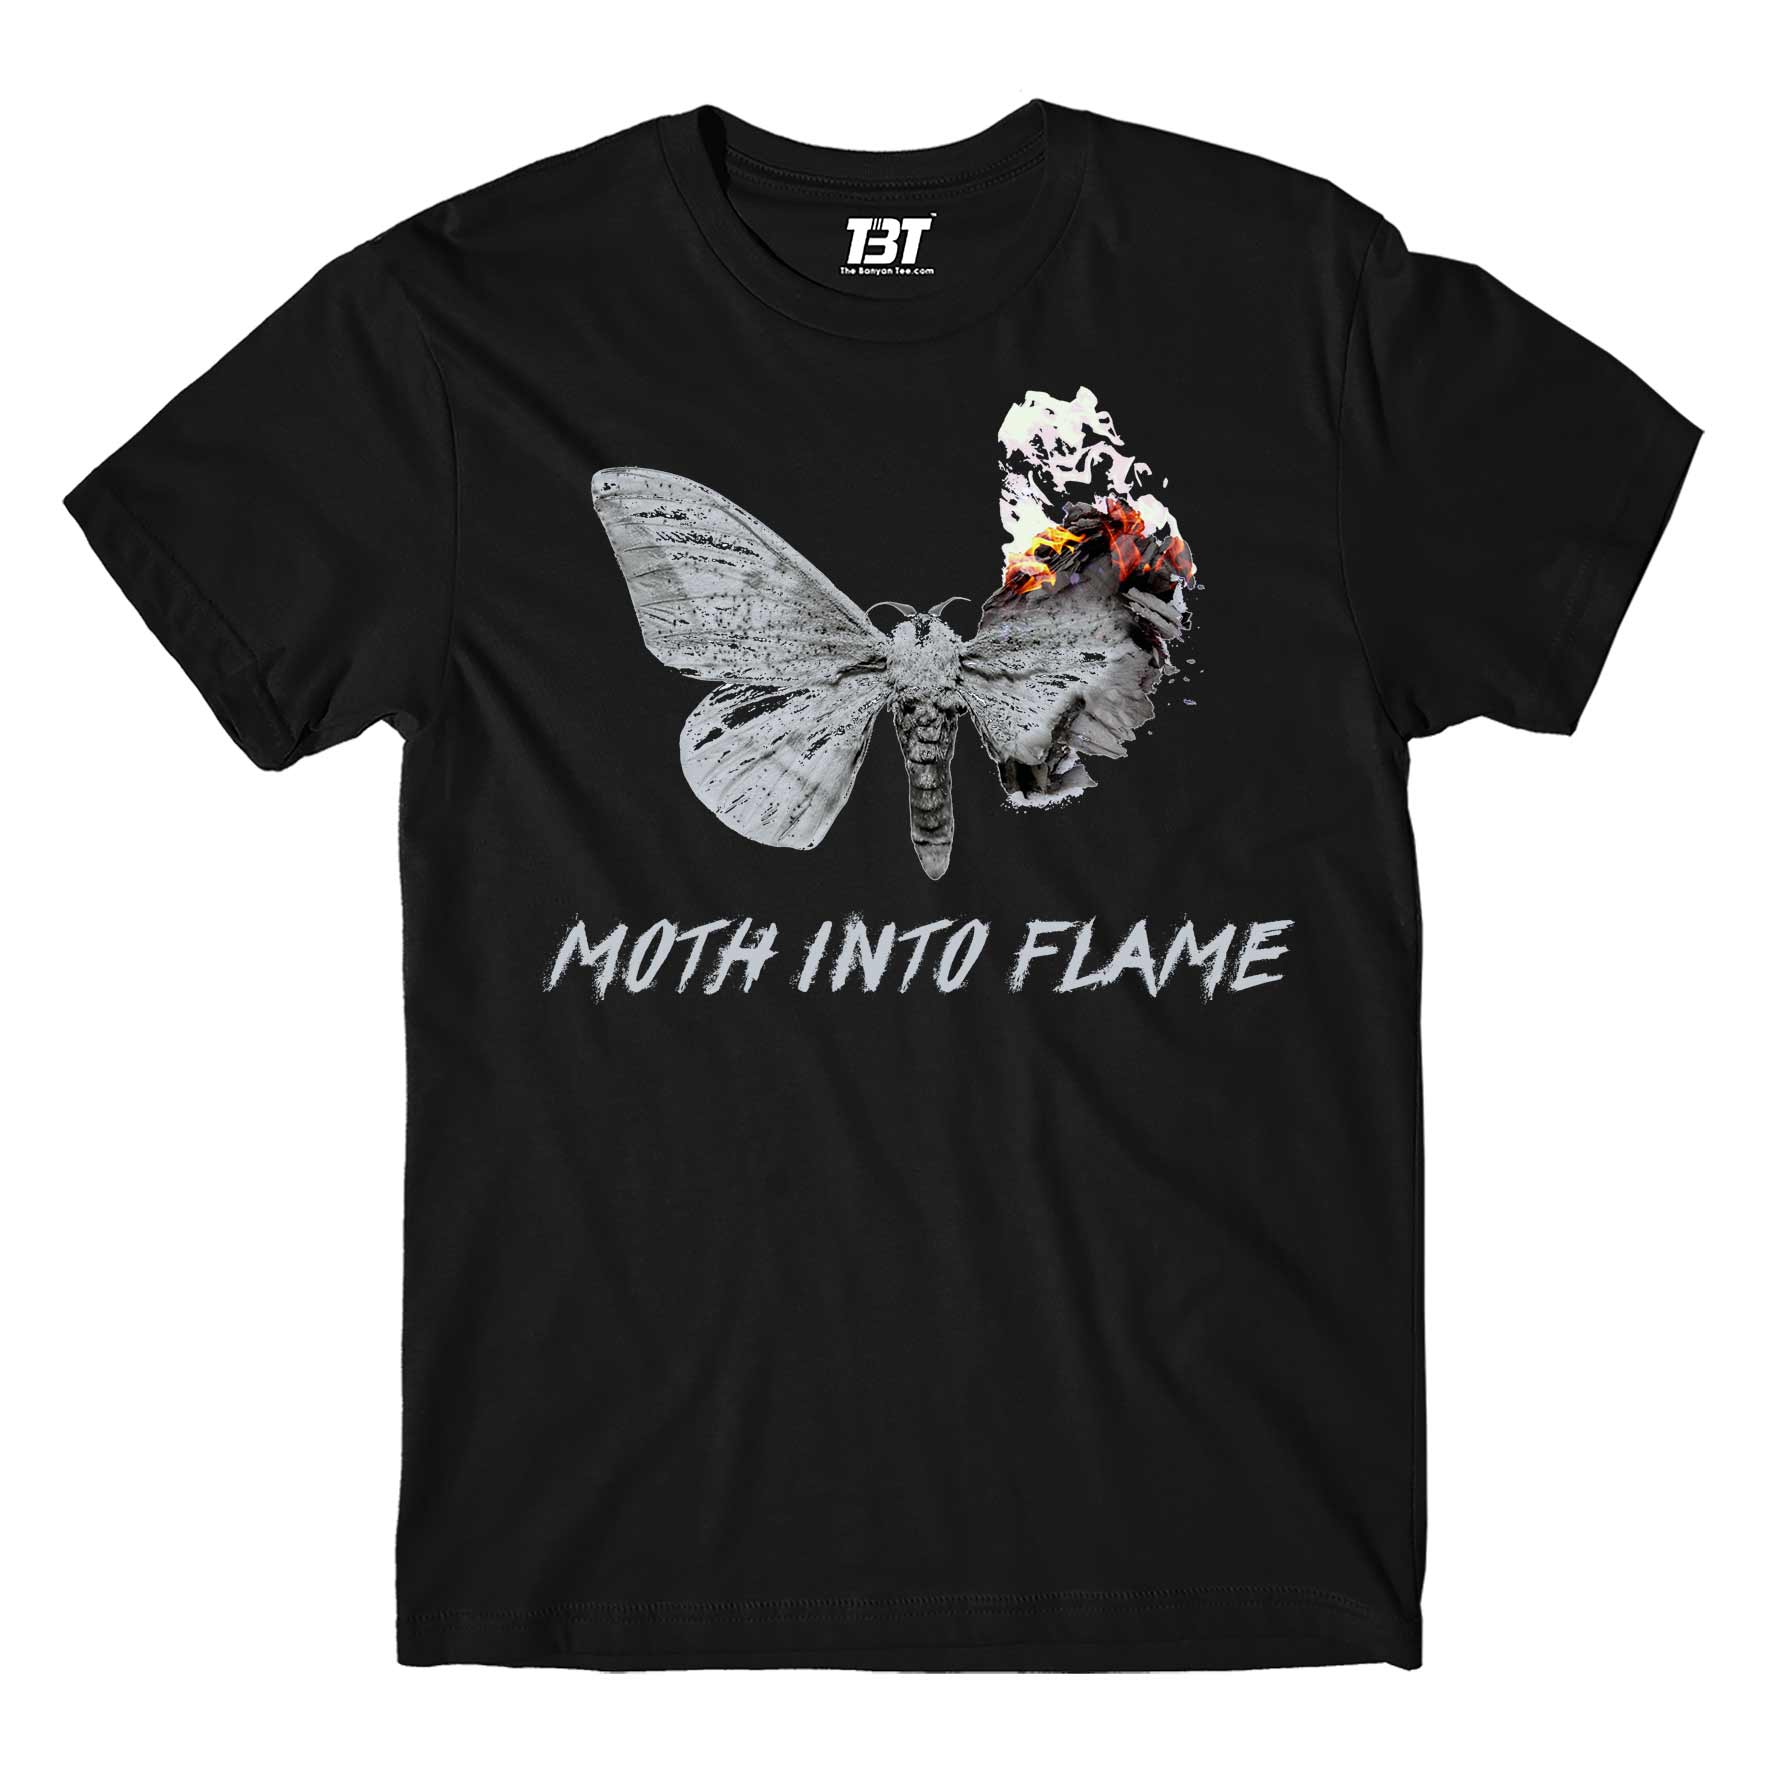 Metallica T-shirt Merchandise Clothing Apparel - Moth Into Flame T-shirt The Banyan Tee TBT